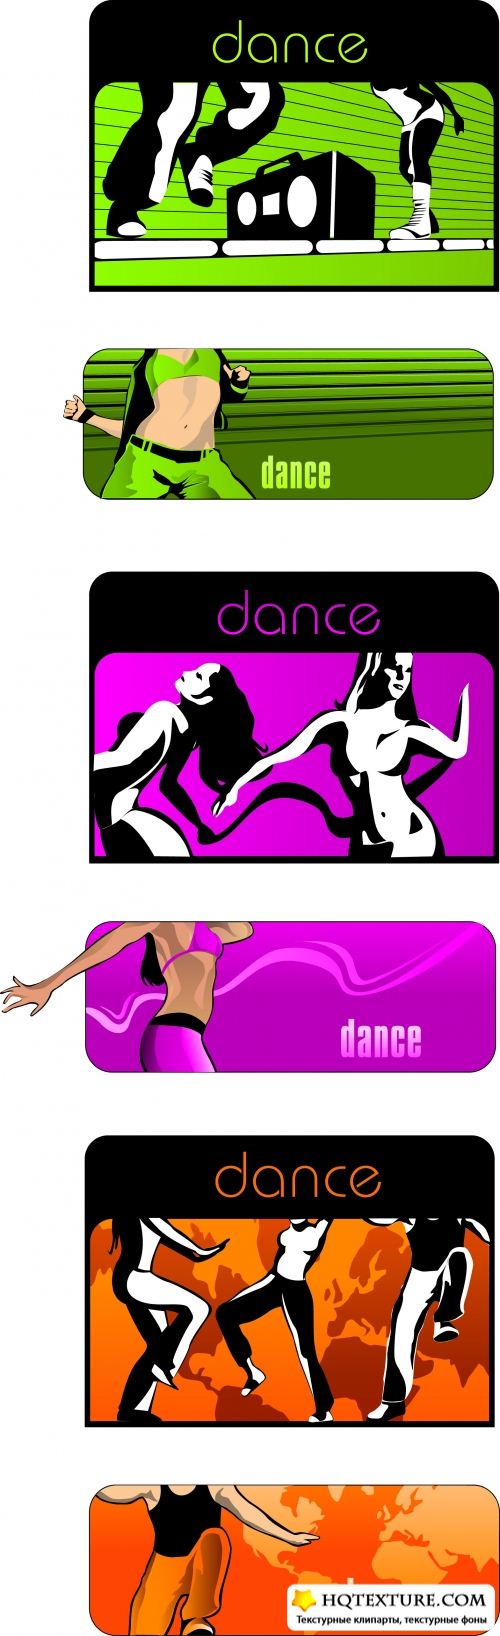 Dance Banners 